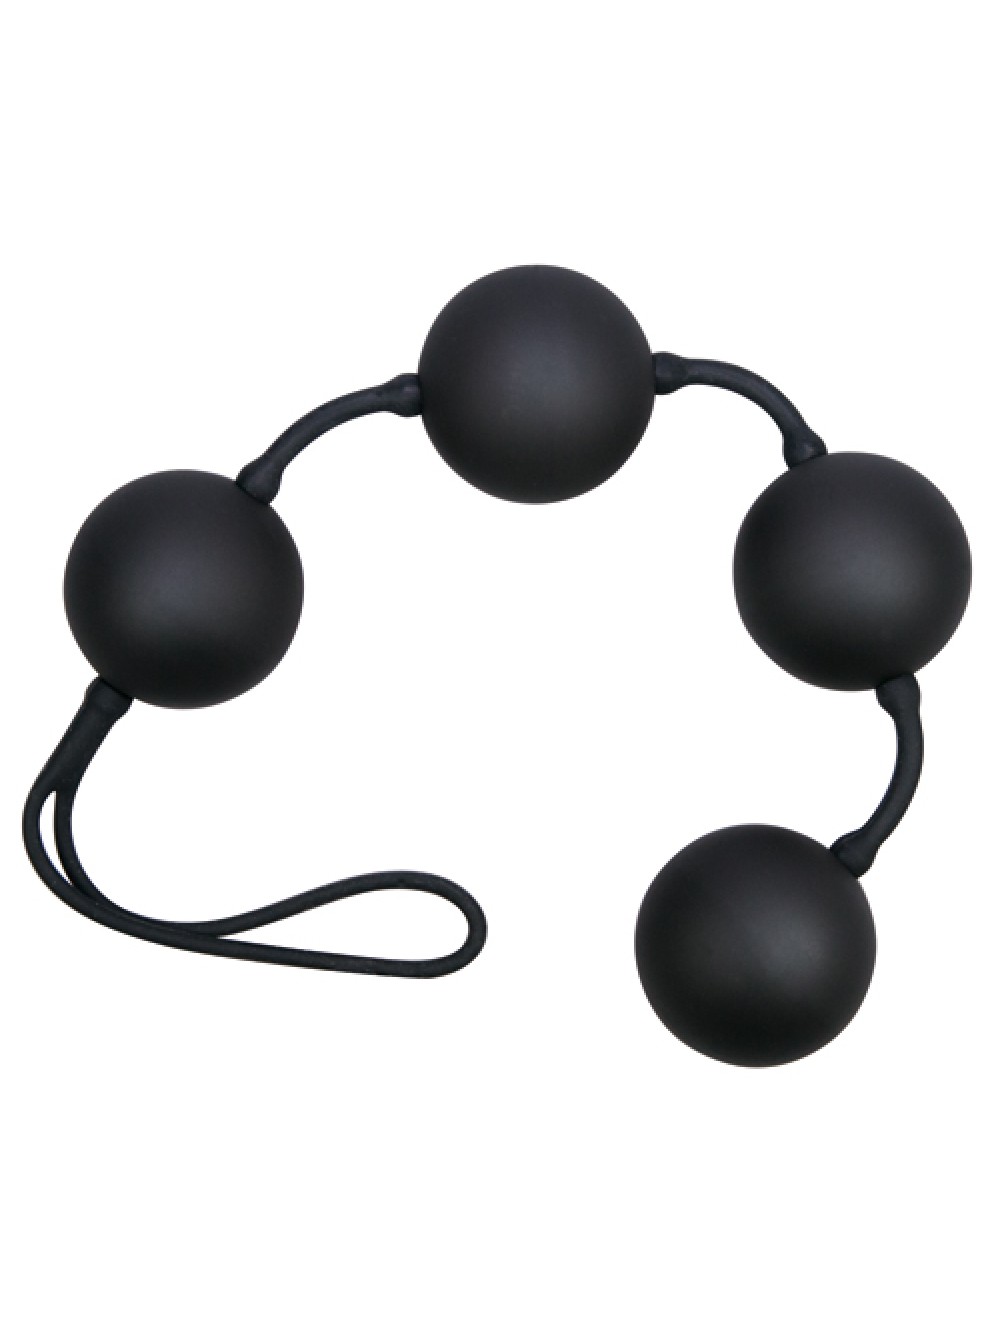 Black love string with 4 balls 4024144507467